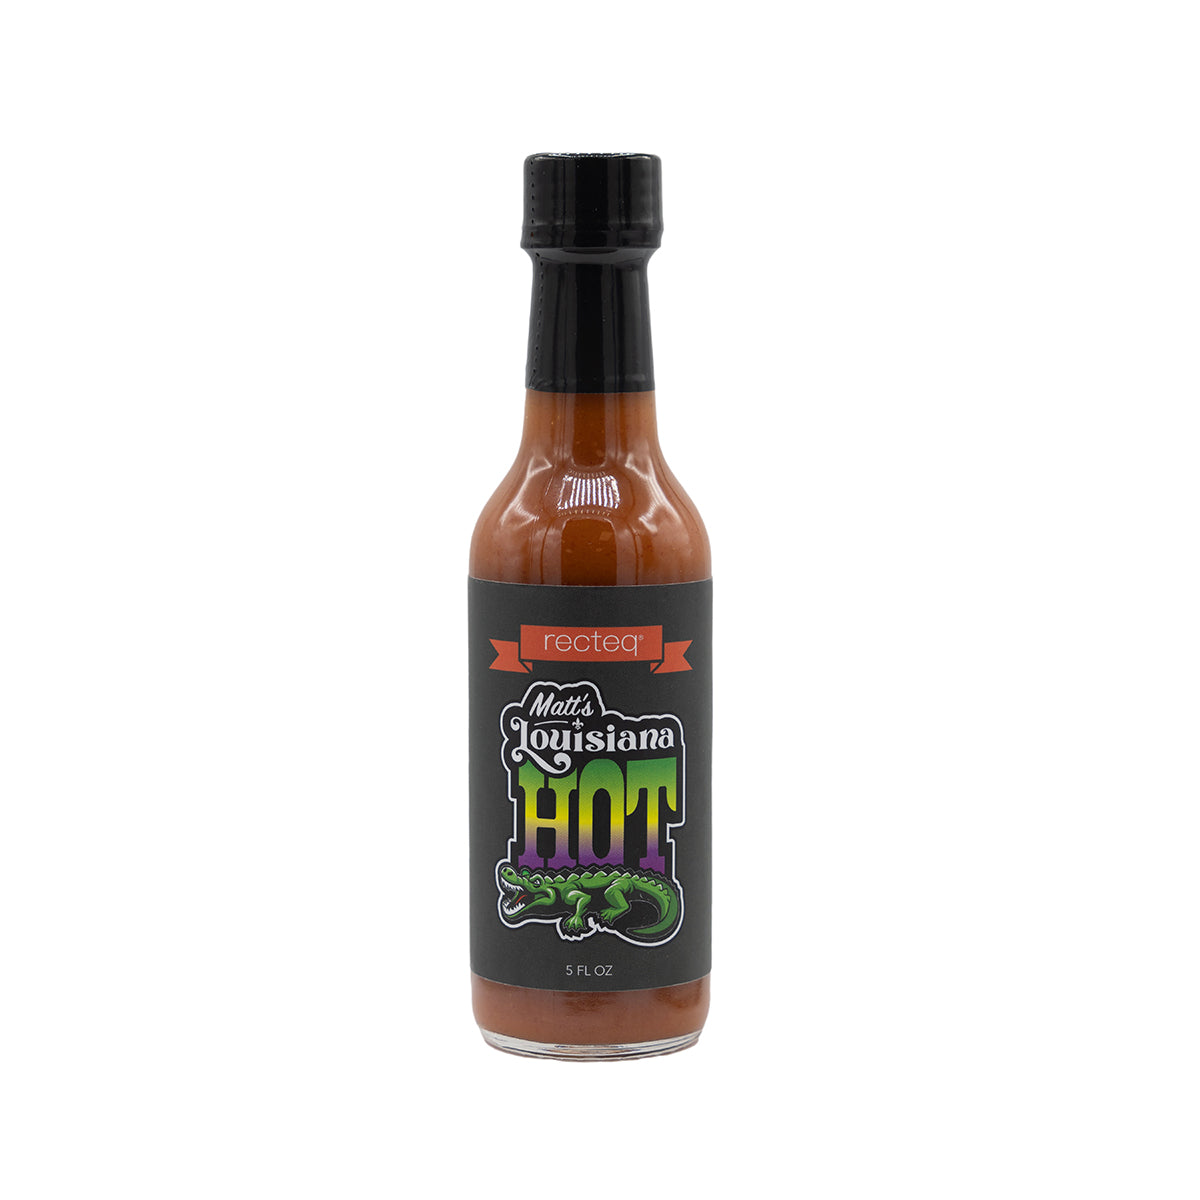 Great Value Louisiana Hot Sauce, 12 fl oz 